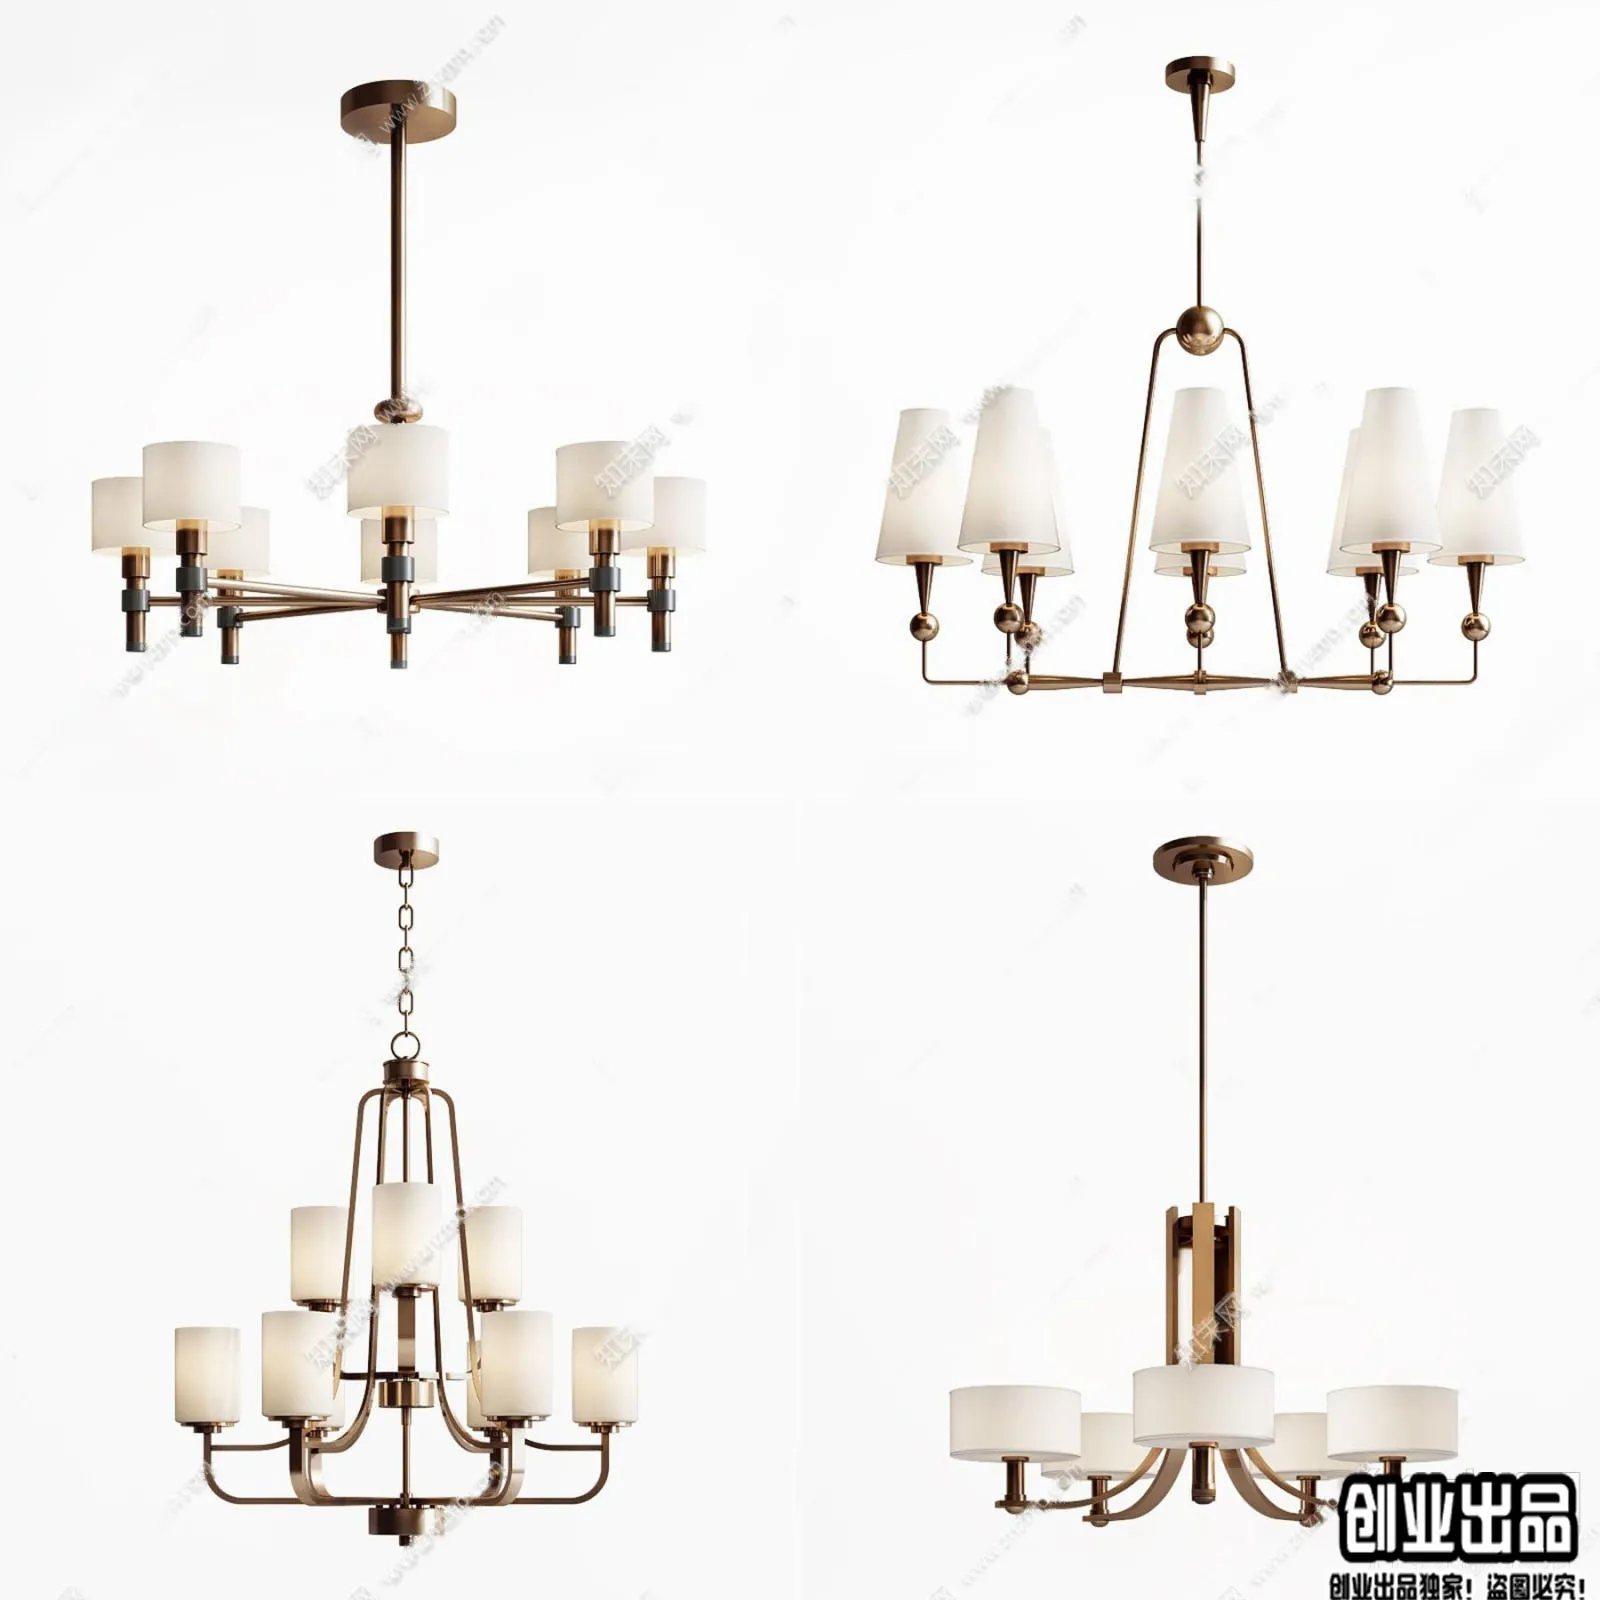 CEILING LAMP – 3D MODELS – 063